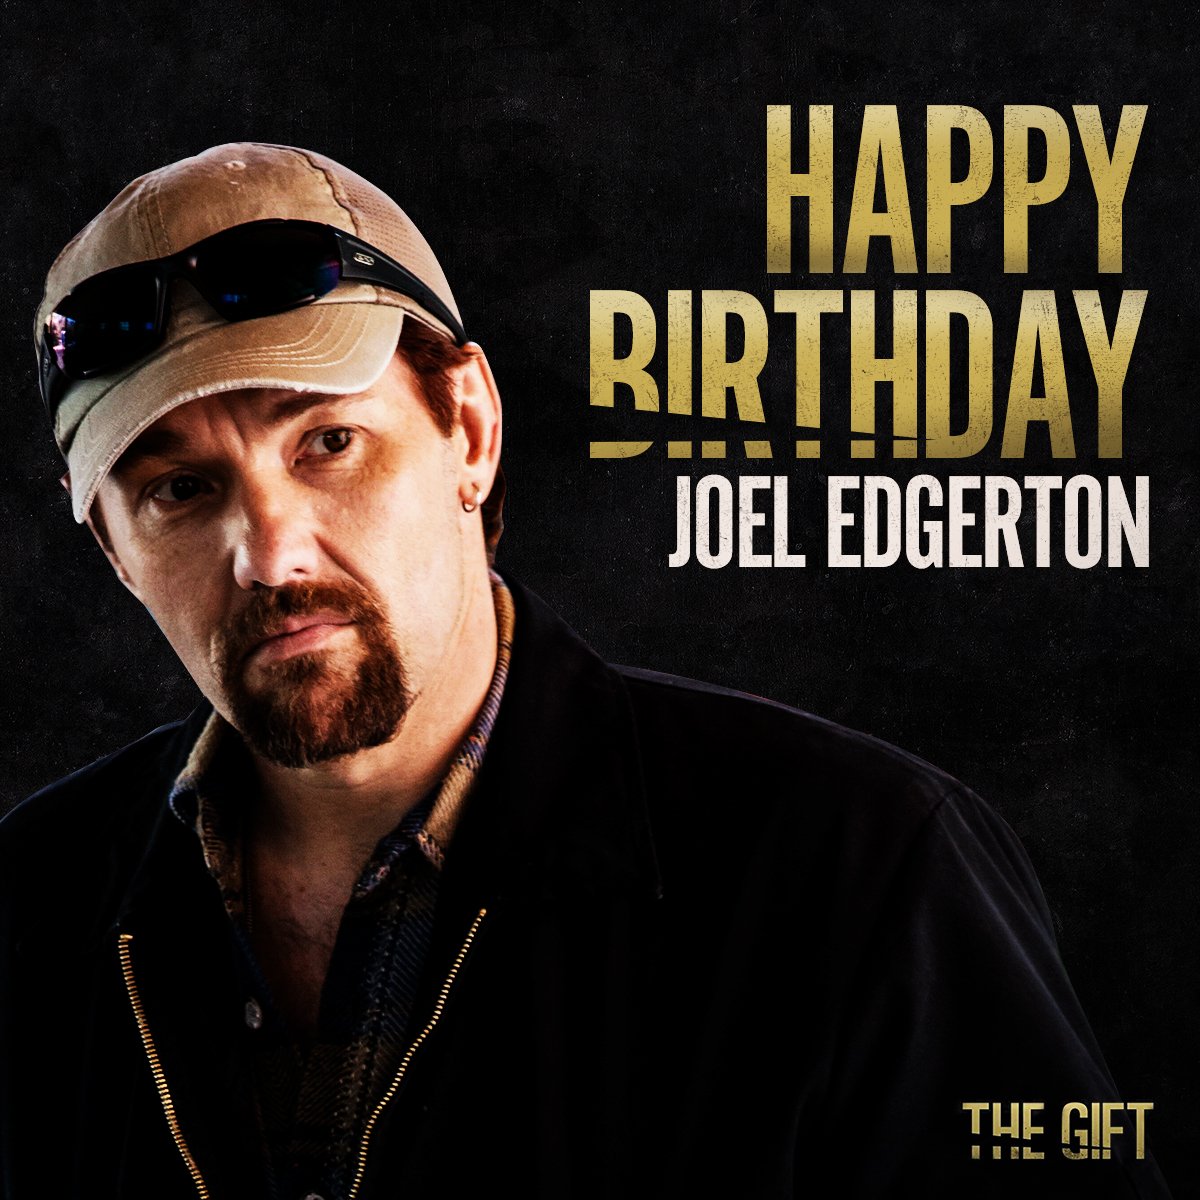 Happy birthday to the man with the terrifying plan, Joel Edgerton. 